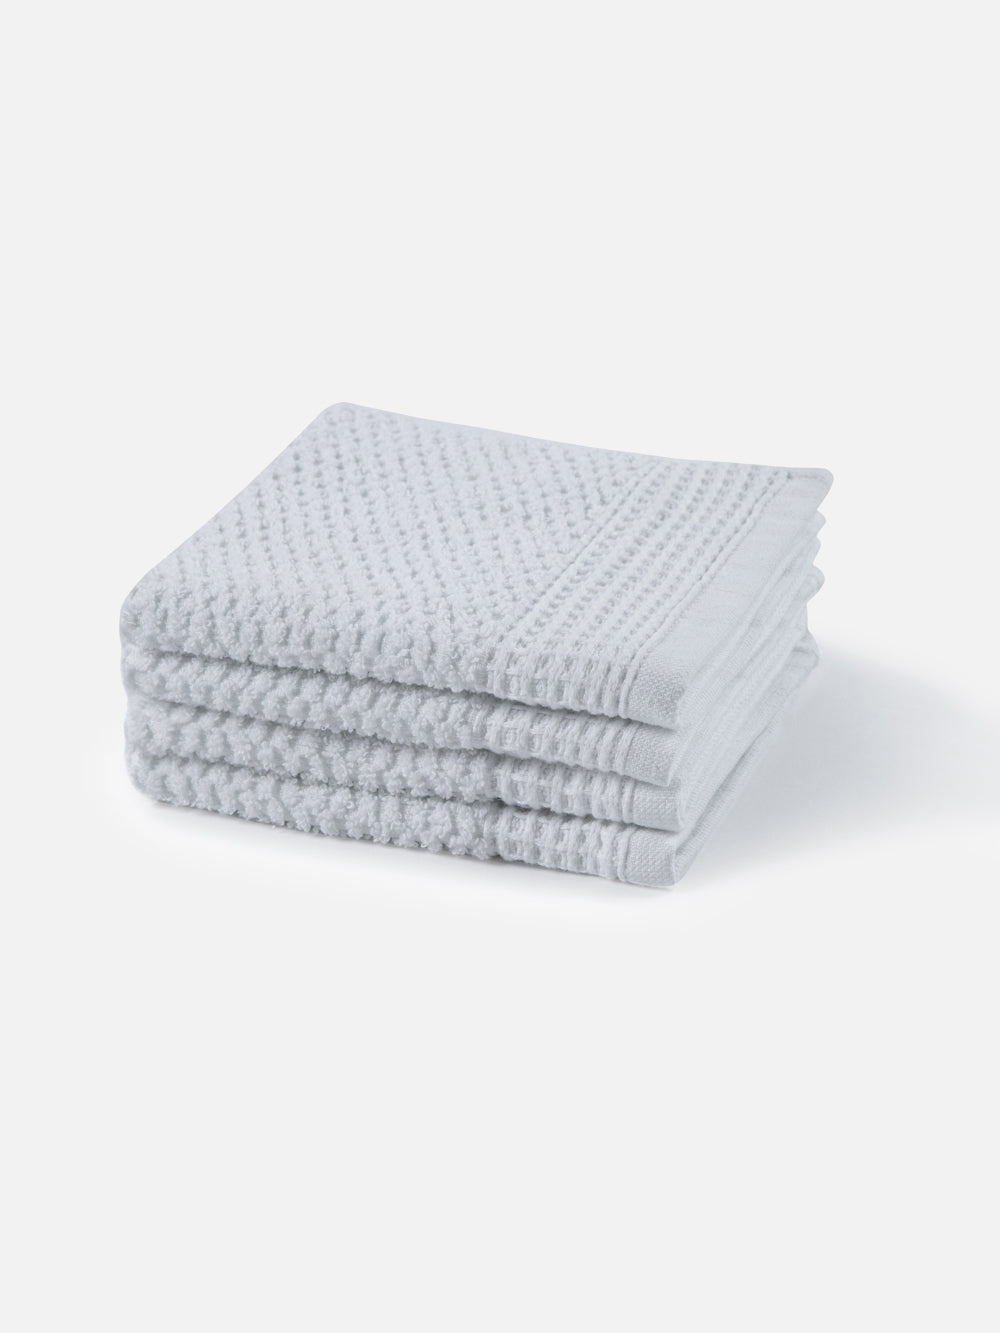 Relax Piqu Hand Towels, Set of 4